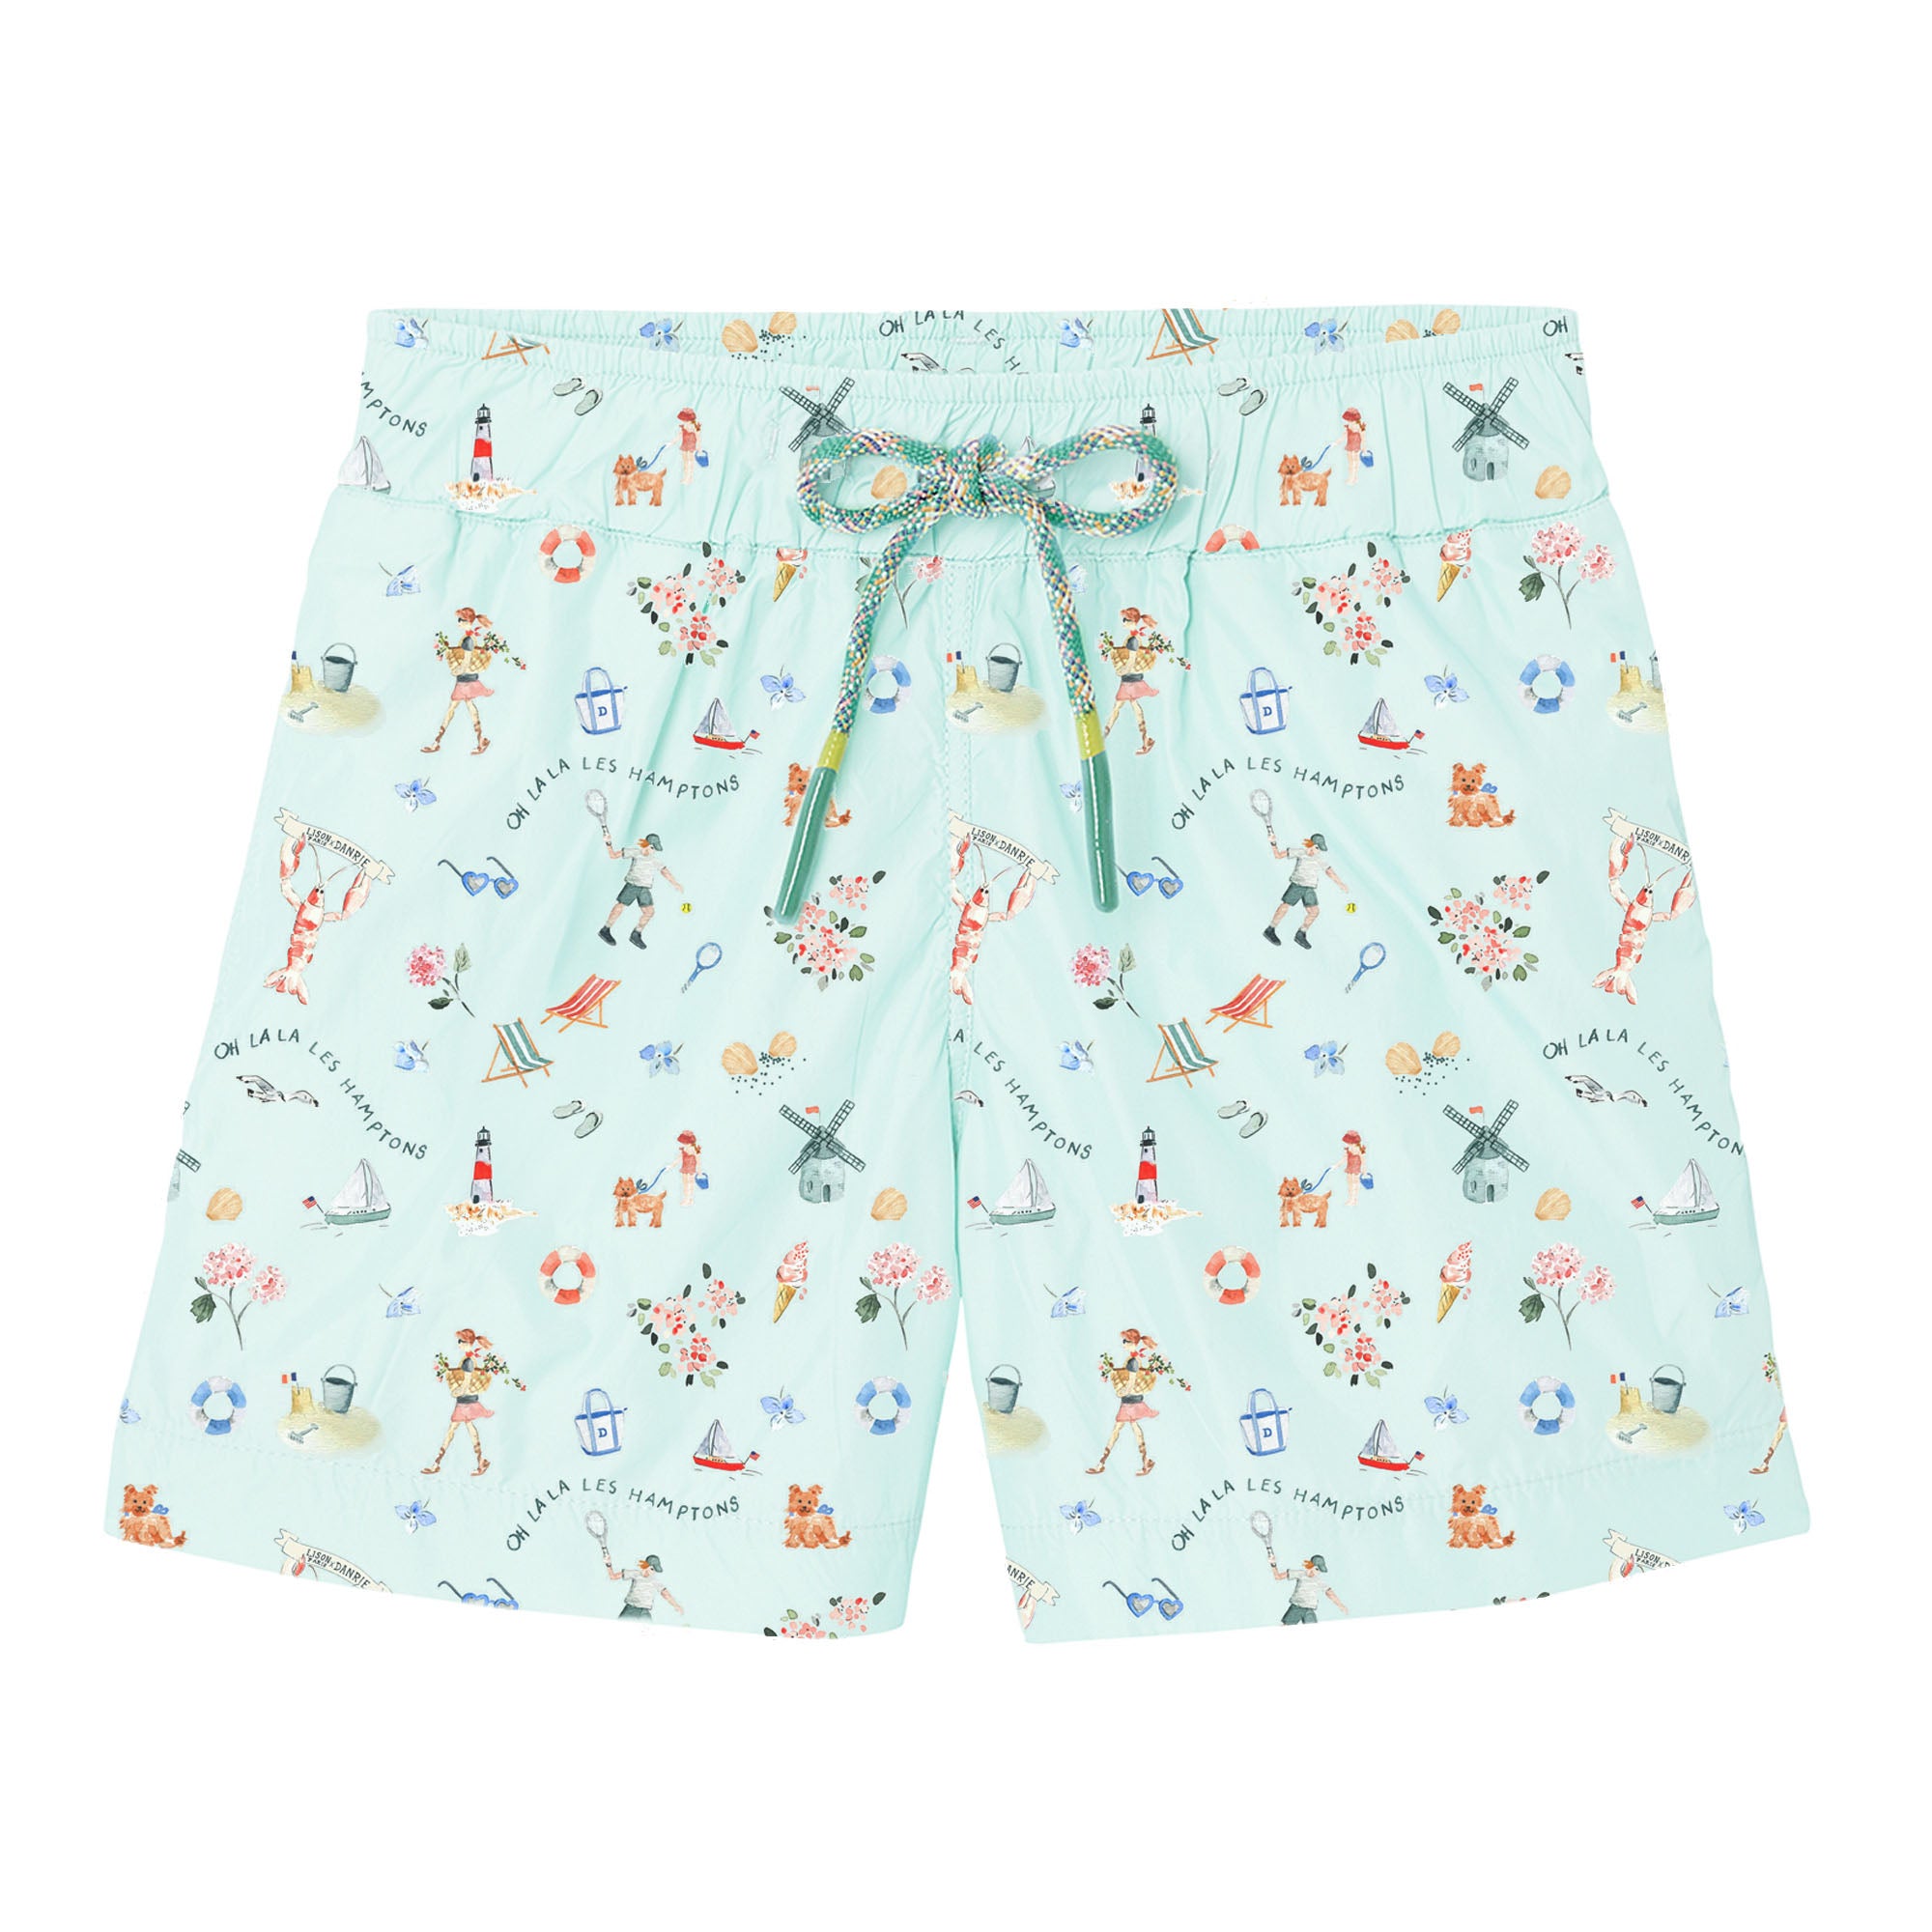 Printed swim shorts, Lison Paris X Danrie